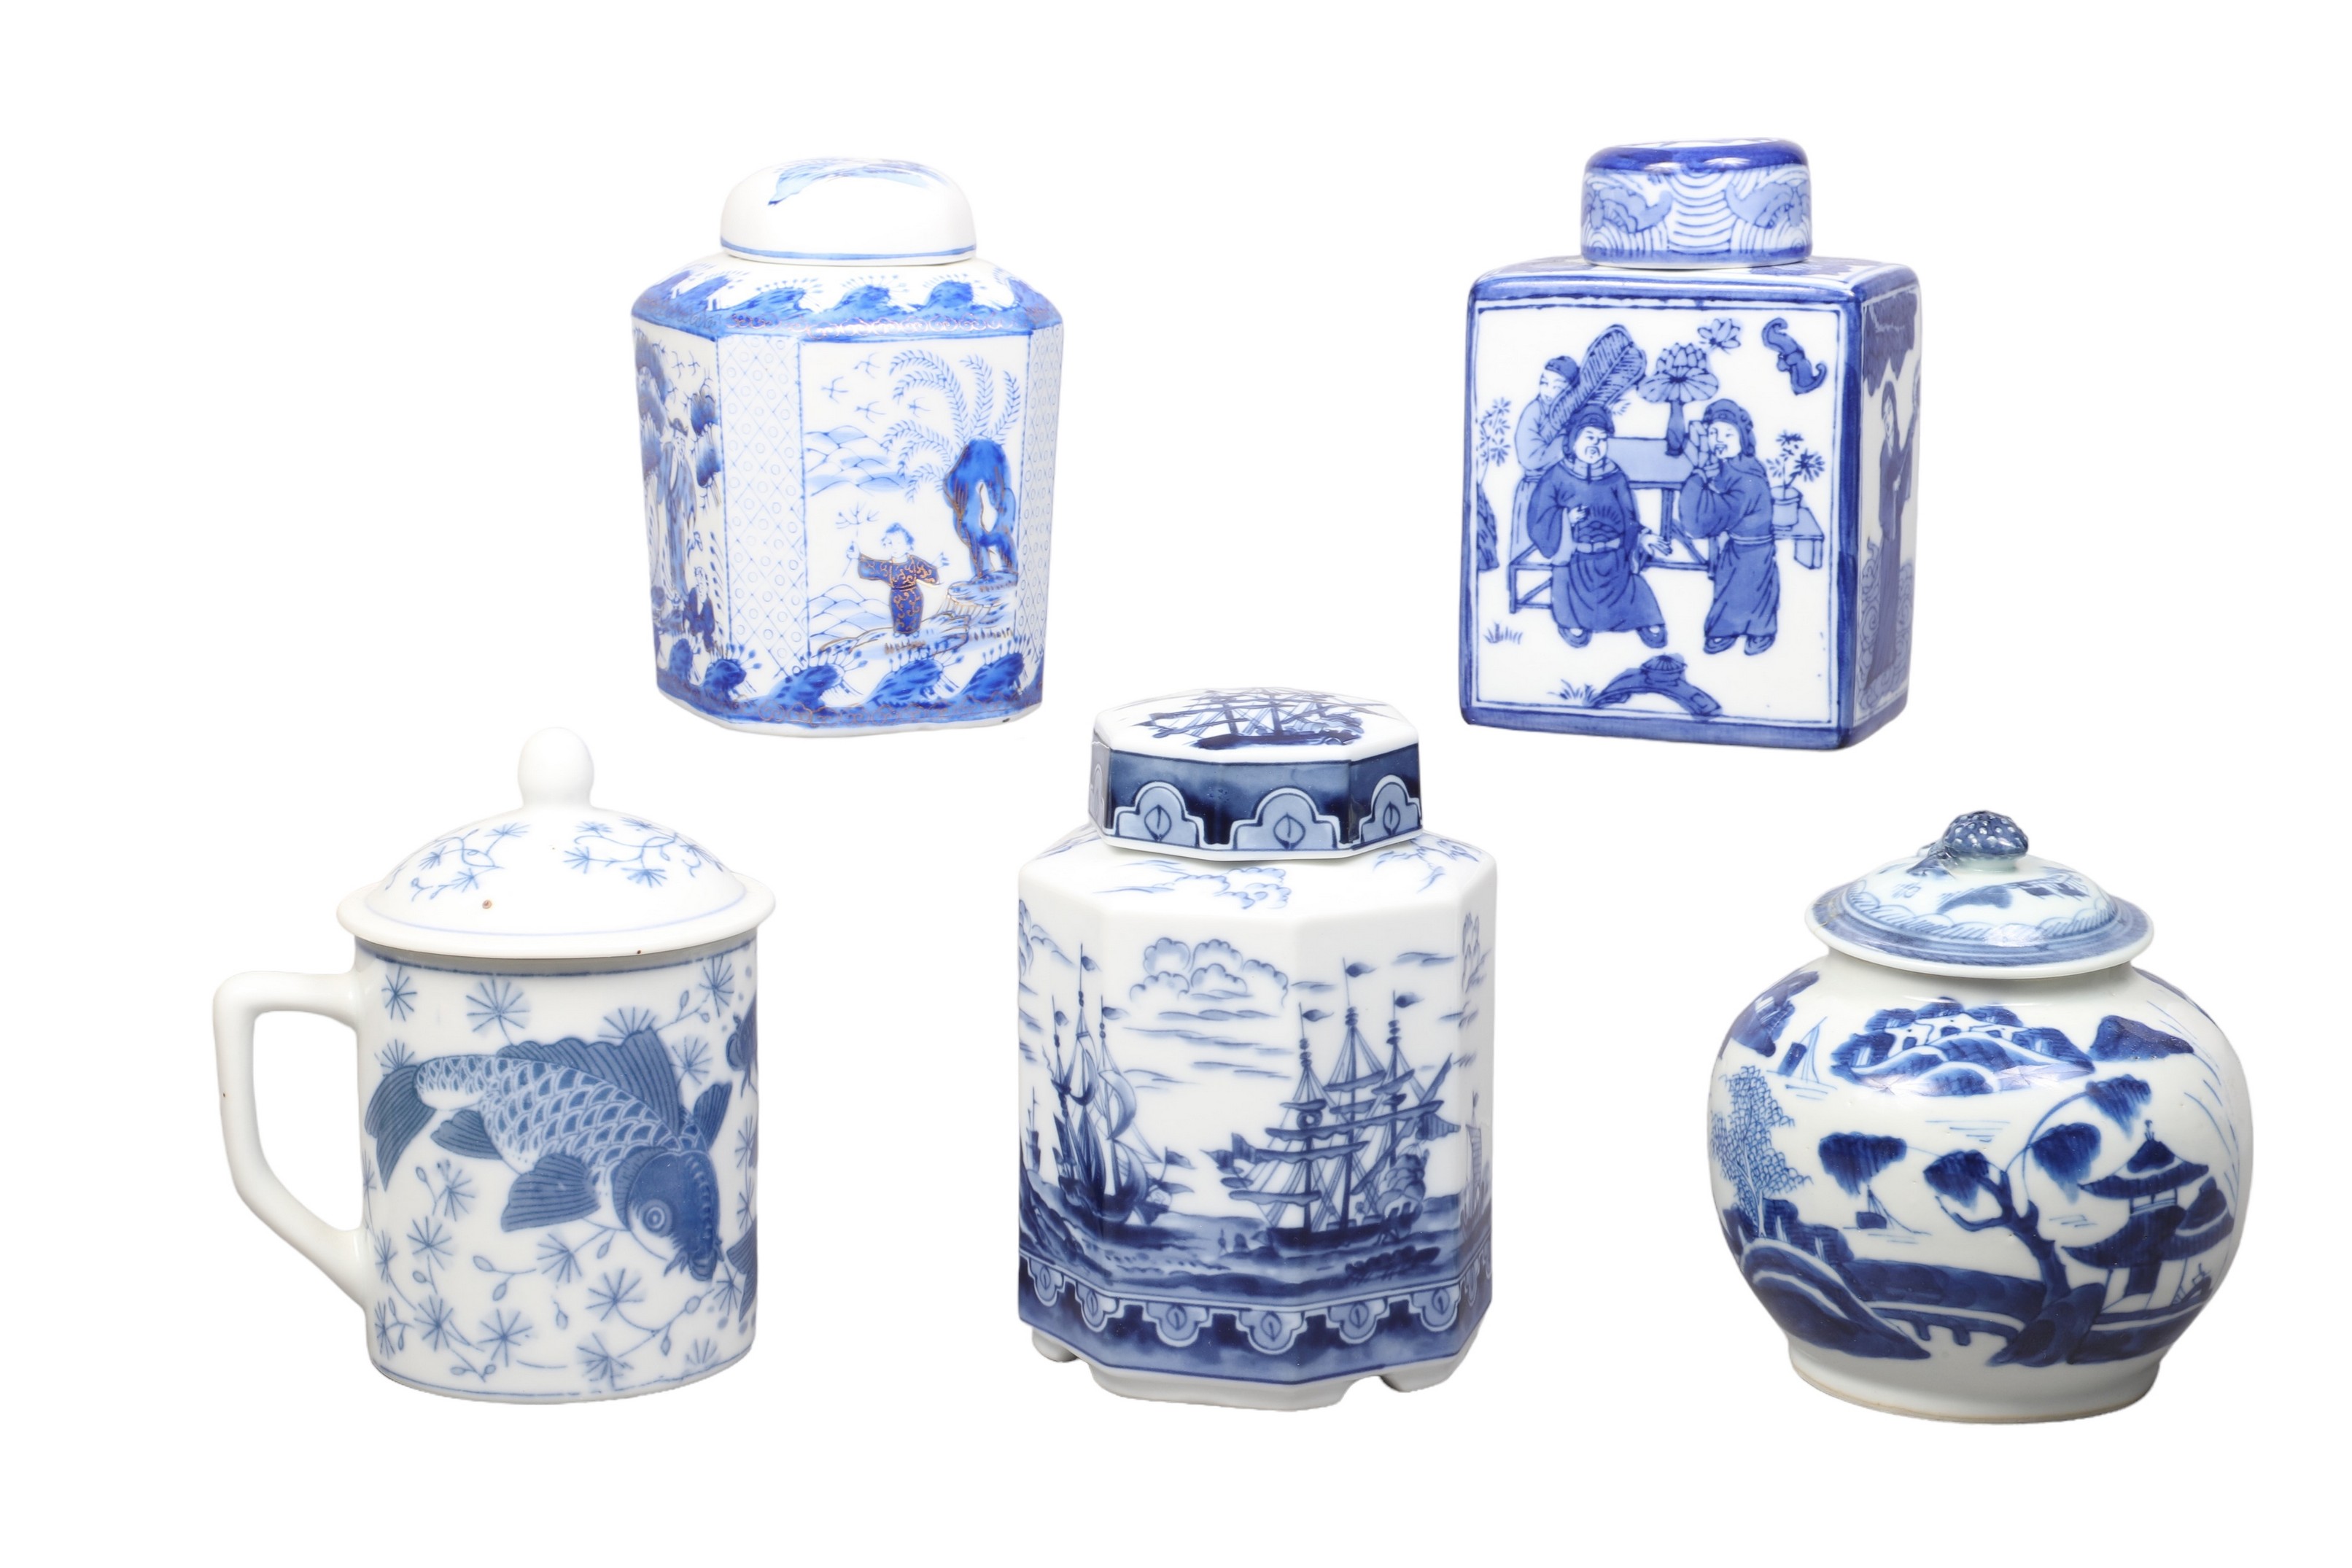  5 Asian porcelain covered jars  2e11d7